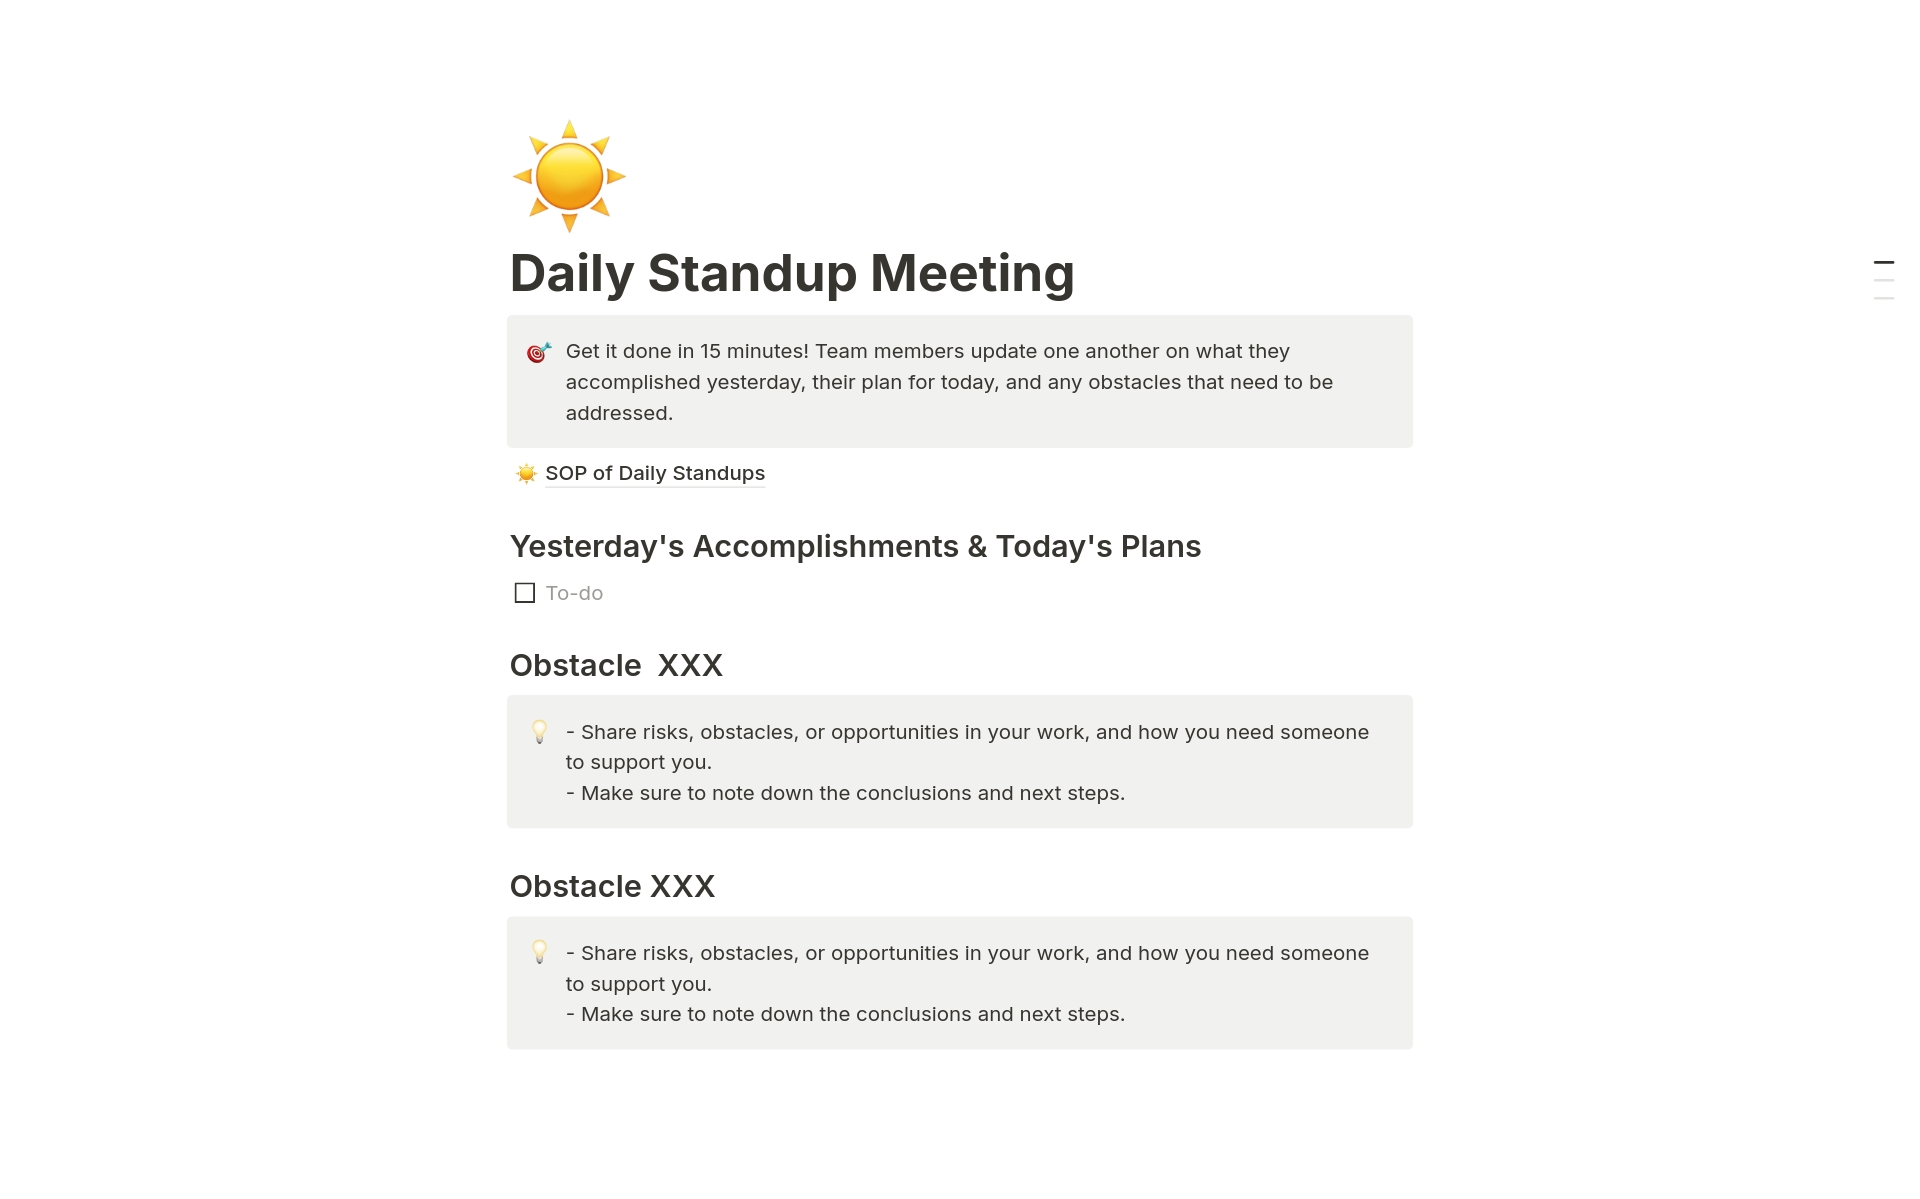 Vista previa de plantilla para Daily Standup Meeting